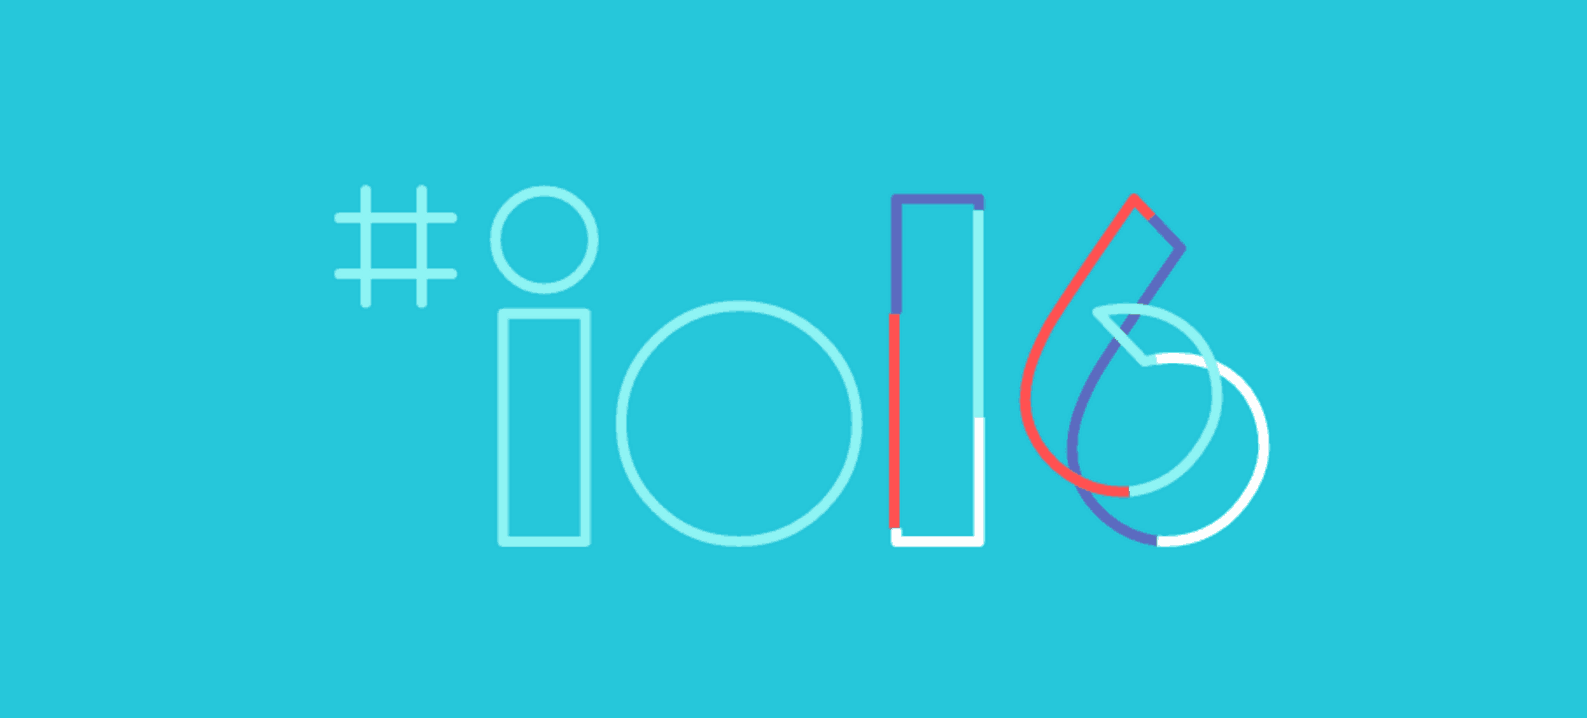 Google-IO-banner